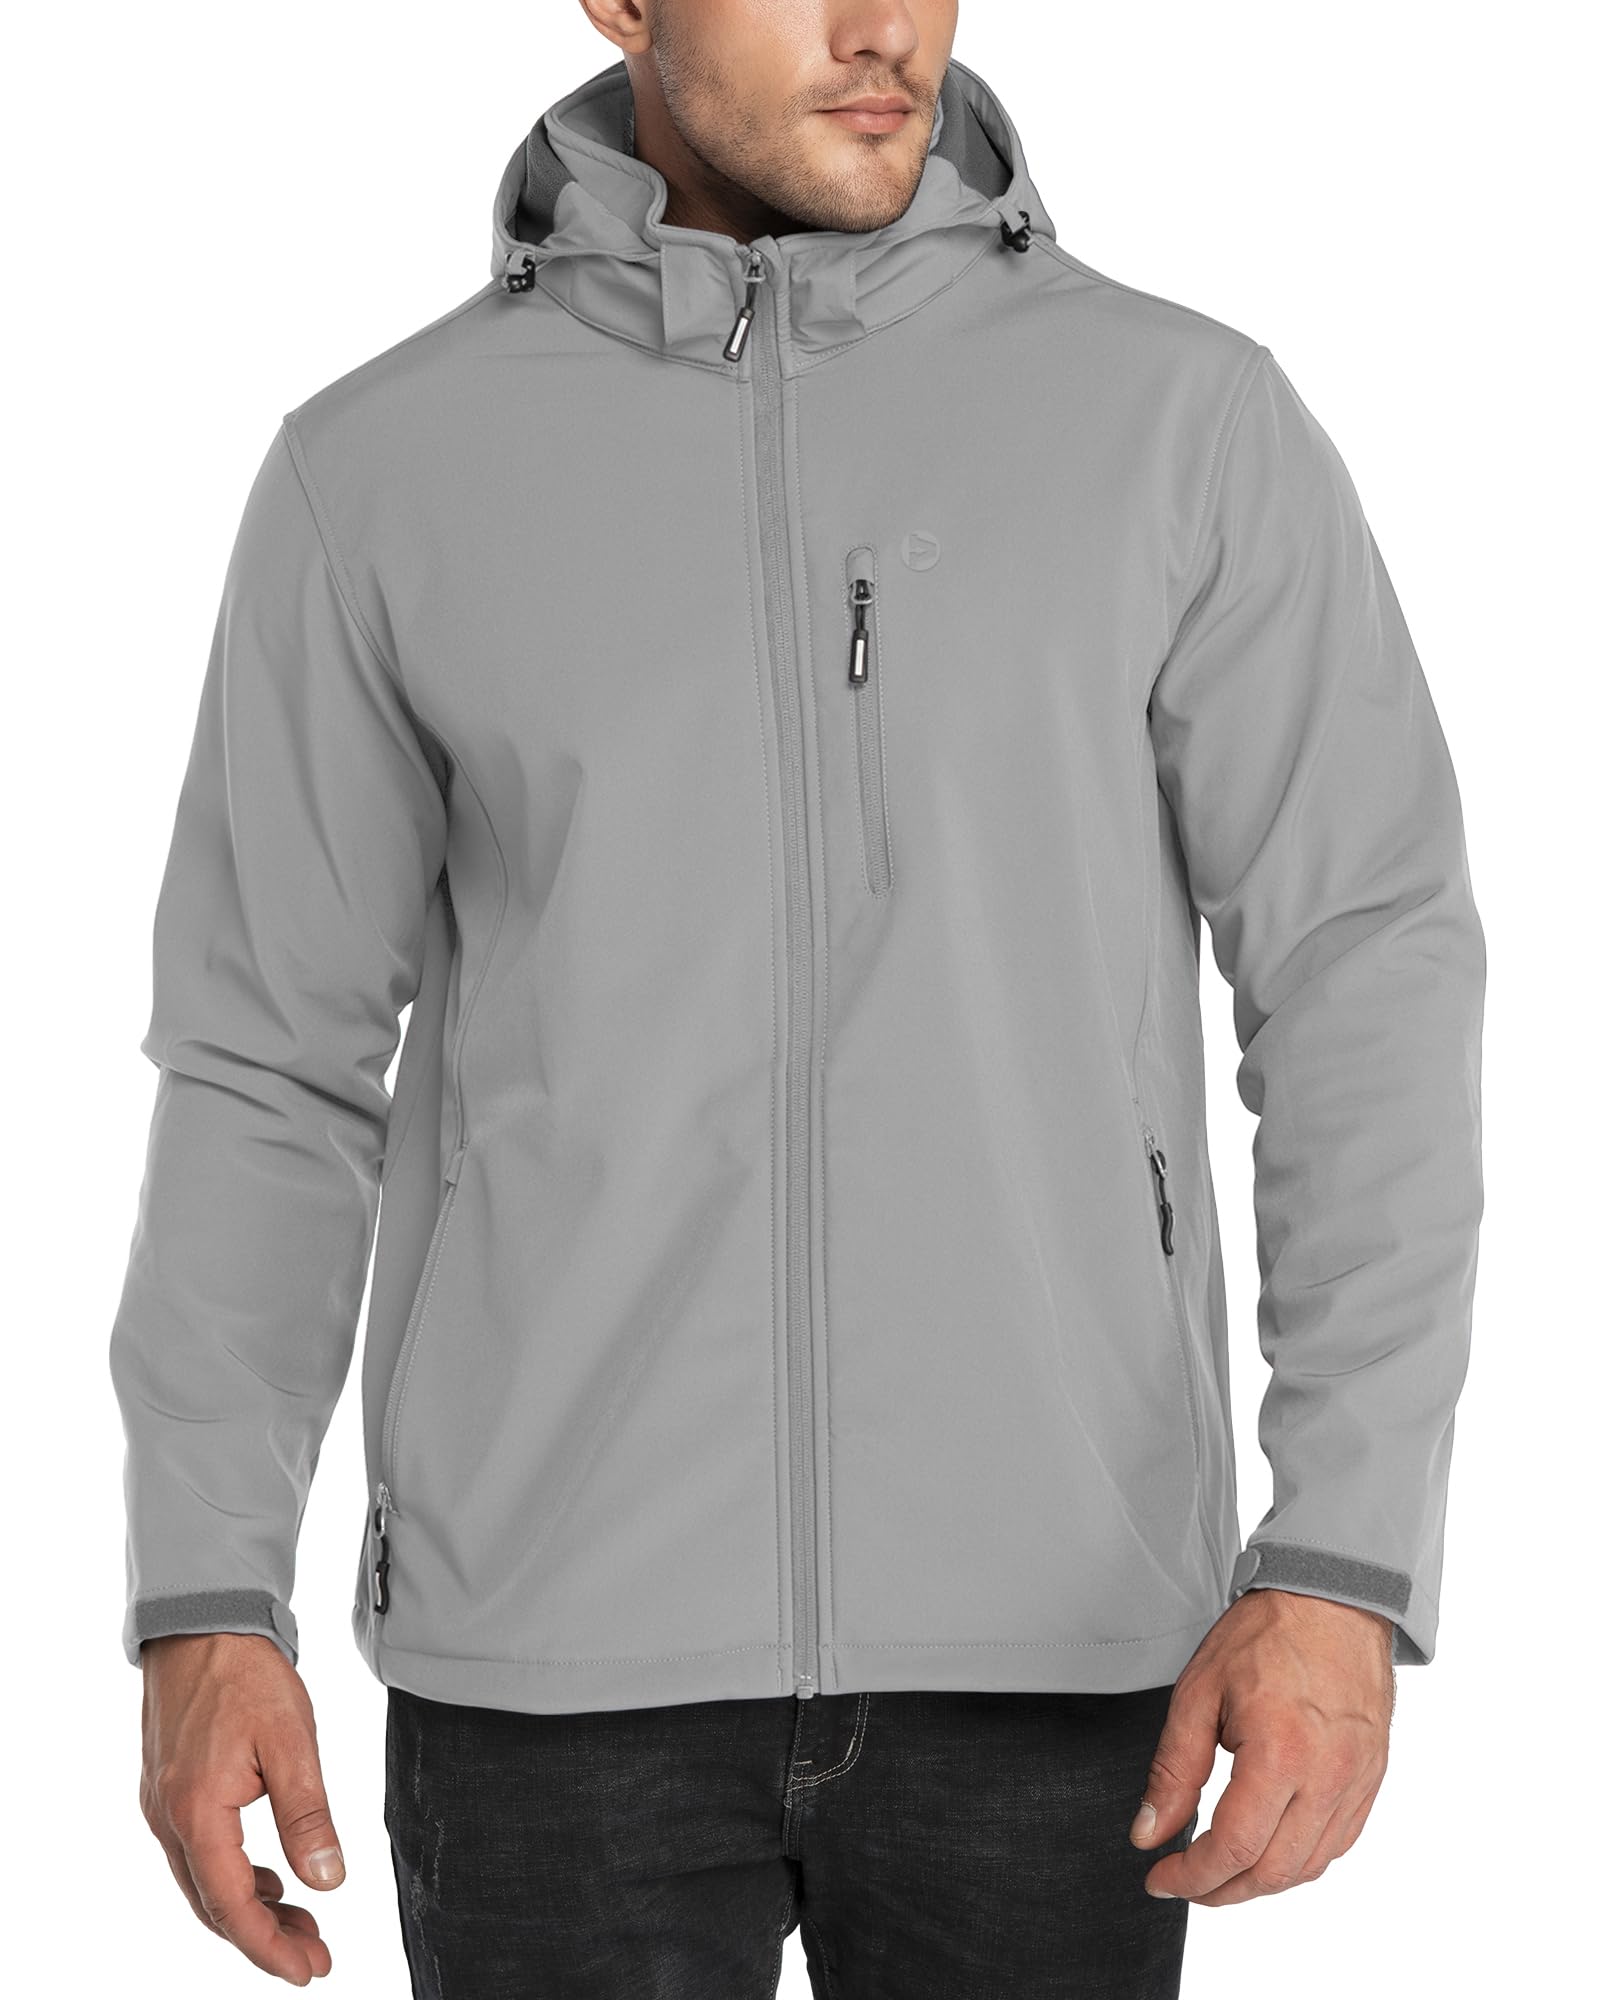 Outdoor Ventures Mens Lightweight Softshell Jacket Fleece Lined Hooded Water Resistant Winter Hiking Windbreaker Jackets 送